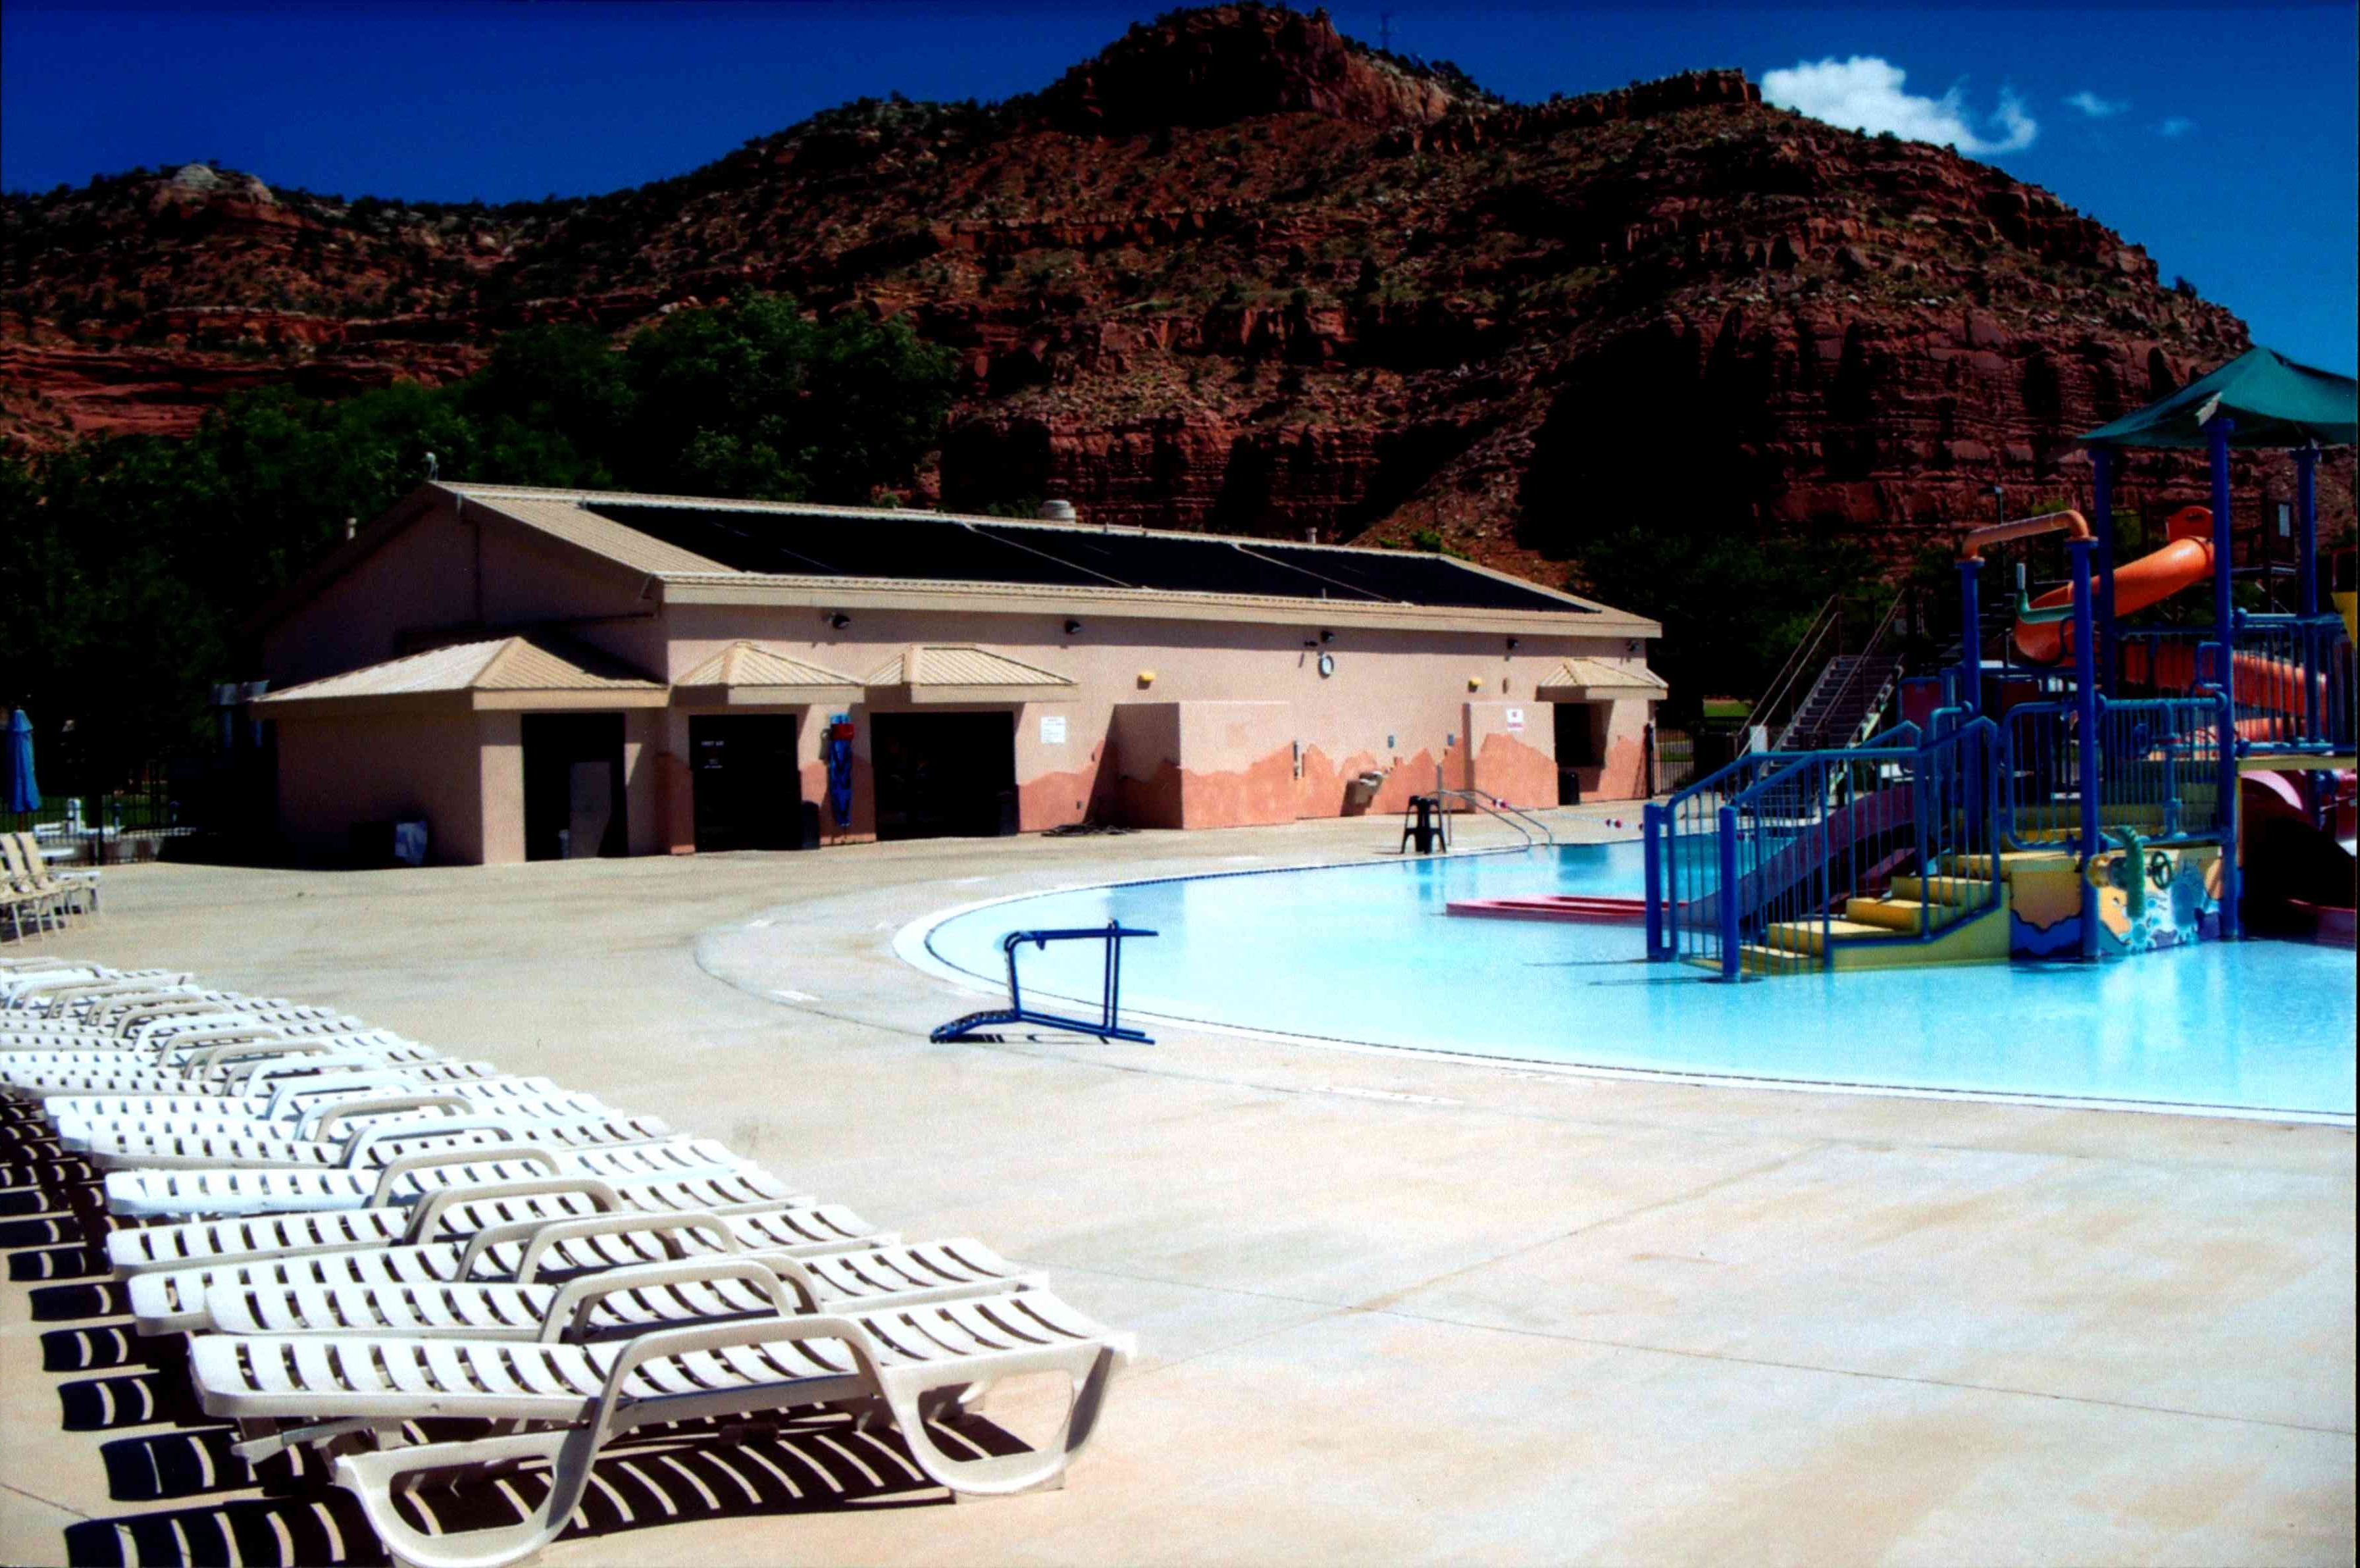 Public Swimming Pool - Solar Pool Heating Installtion